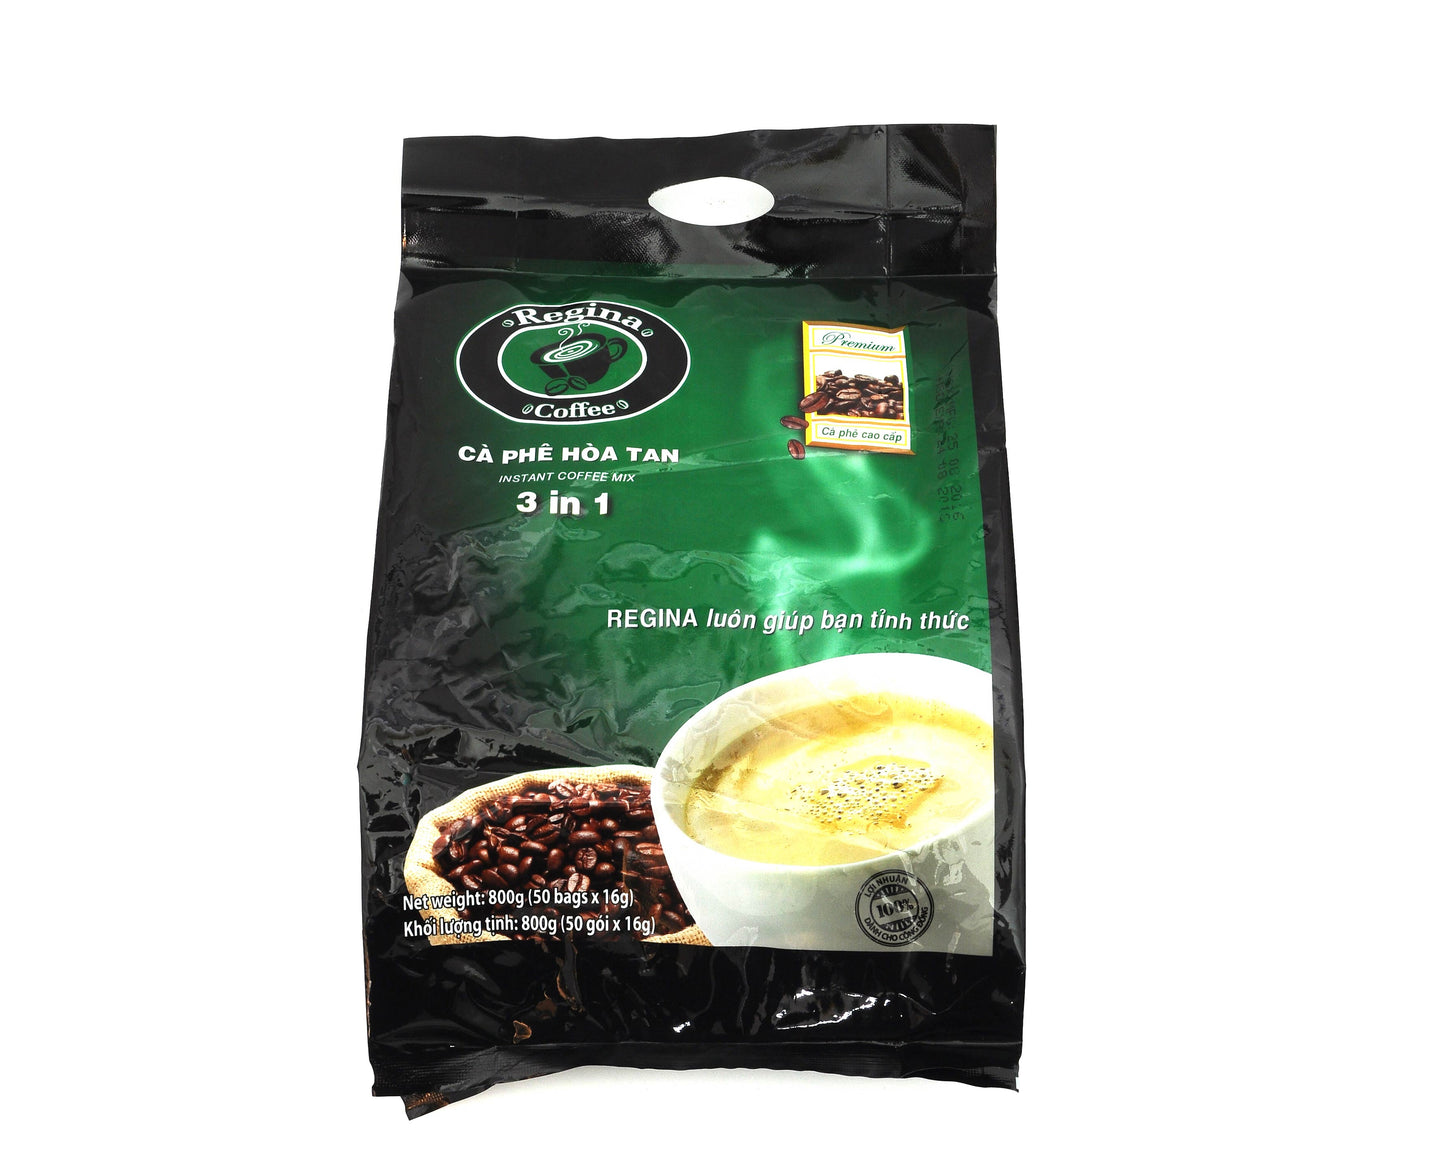 Regina Coffee Instant Coffee Mix 3 in 1 Premium Vietnamese Coffee